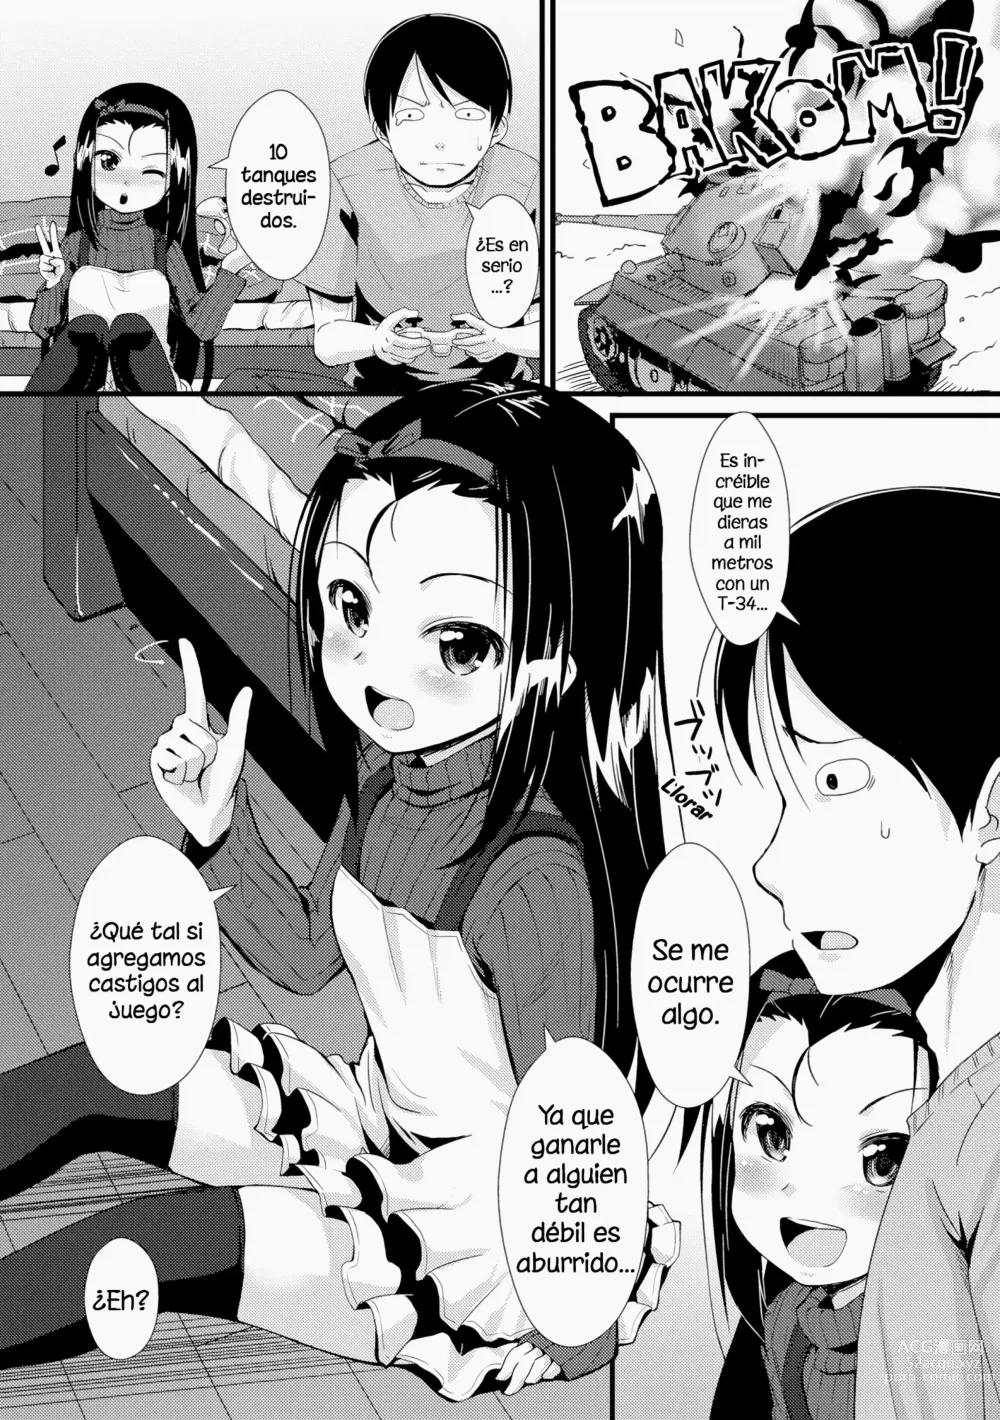 Page 3 of manga Juegos de adultos